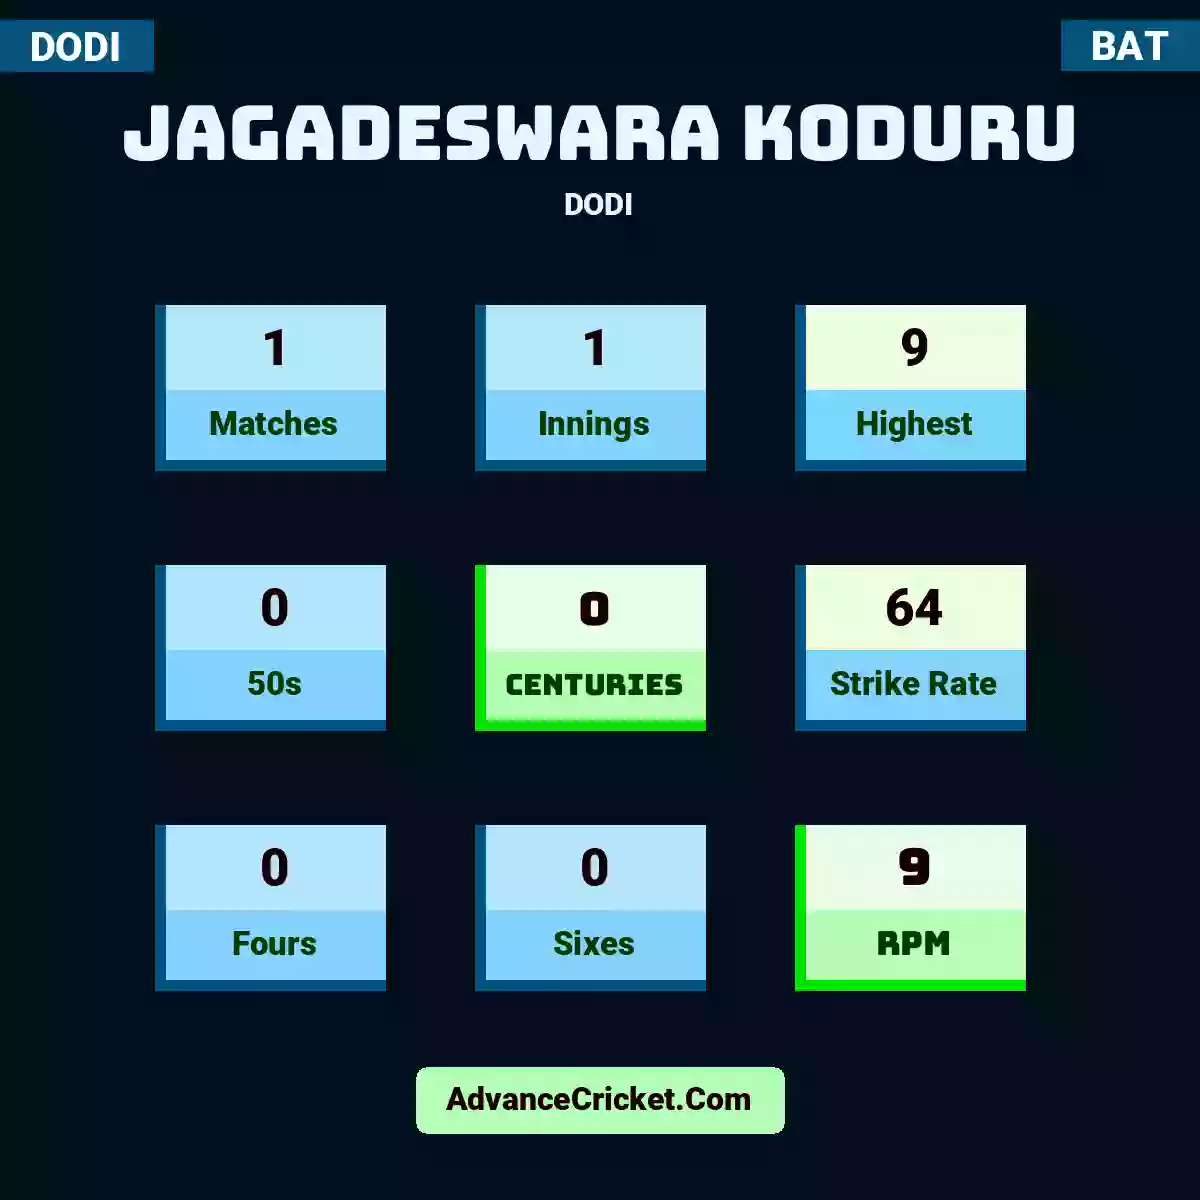 Jagadeswara Koduru DODI , Jagadeswara Koduru played 1 matches, scored 9 runs as highest, 0 half-centuries, and 0 centuries, with a strike rate of 64. J.Koduru hit 0 fours and 0 sixes, with an RPM of 9.